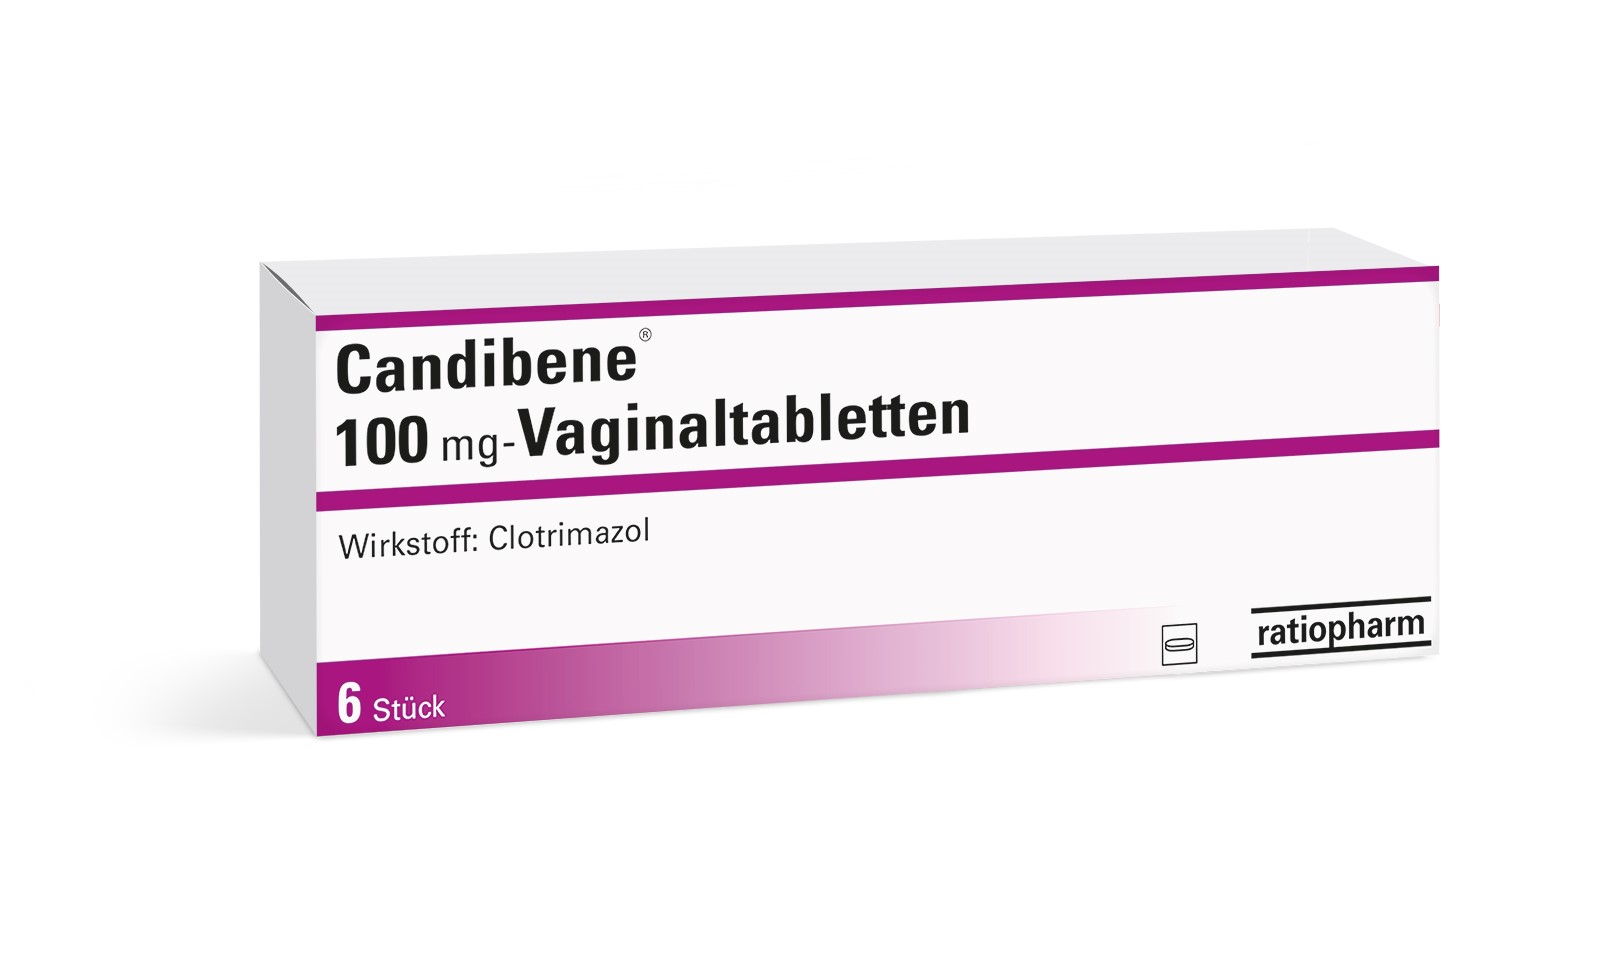 Candibene 100 mg - Vaginaltabletten